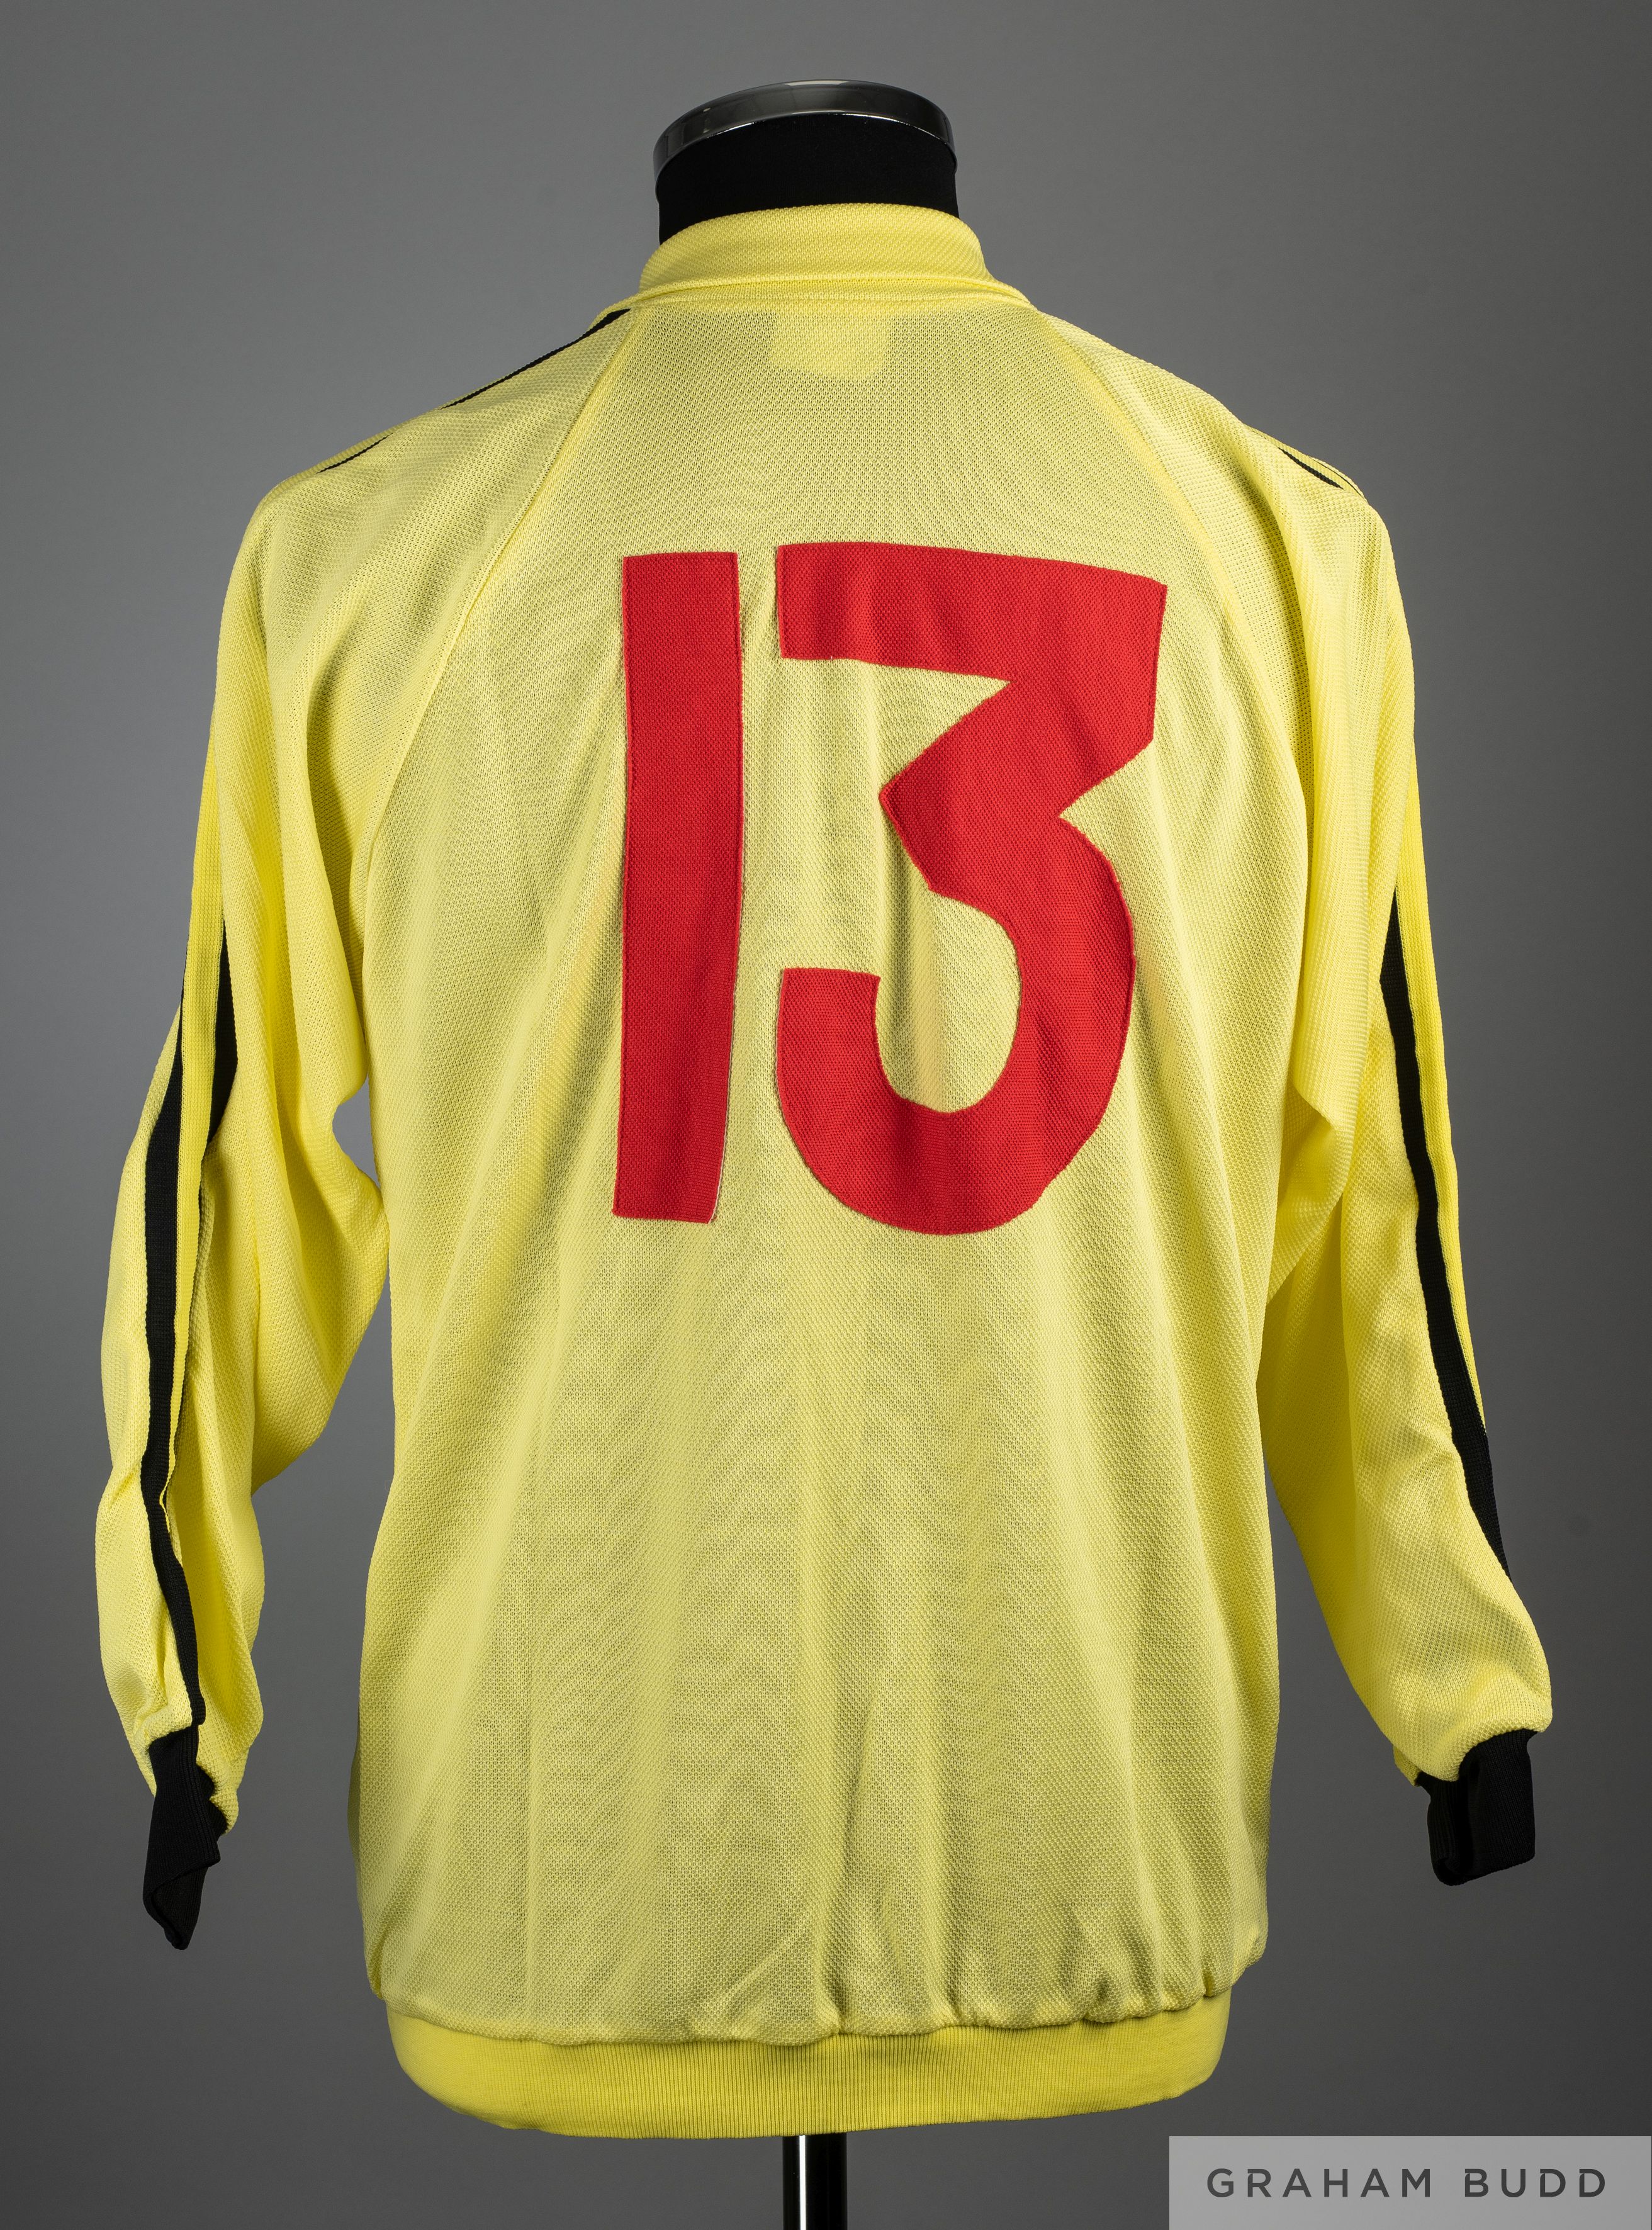 Peter Shilton yellow No.13 England International goalkeepers shirt, 1970s - Image 2 of 2